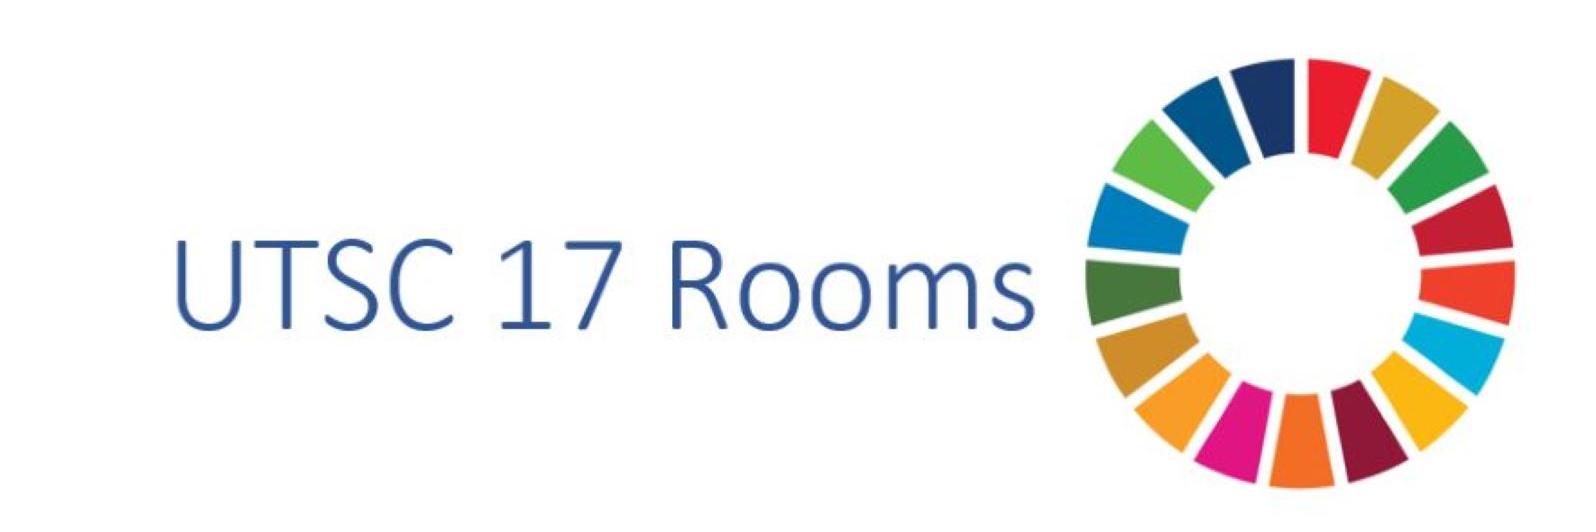 UTSC 17 Rooms Event 